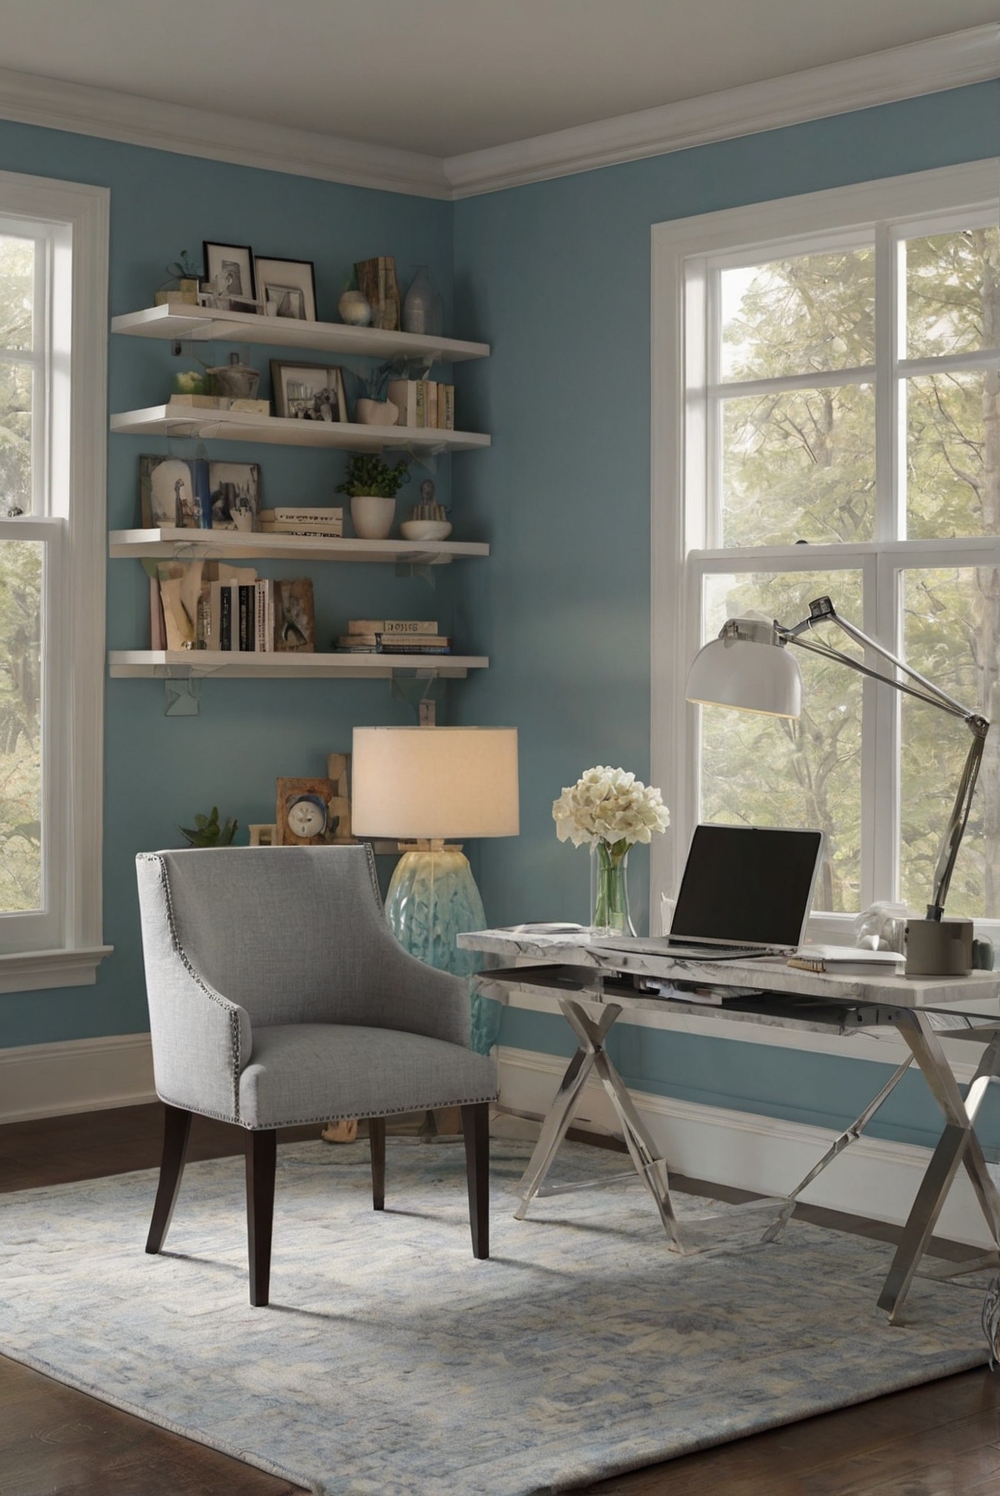 interior designer, home decor, wall paint, interior design, kitchen design, living room decor, paint color match